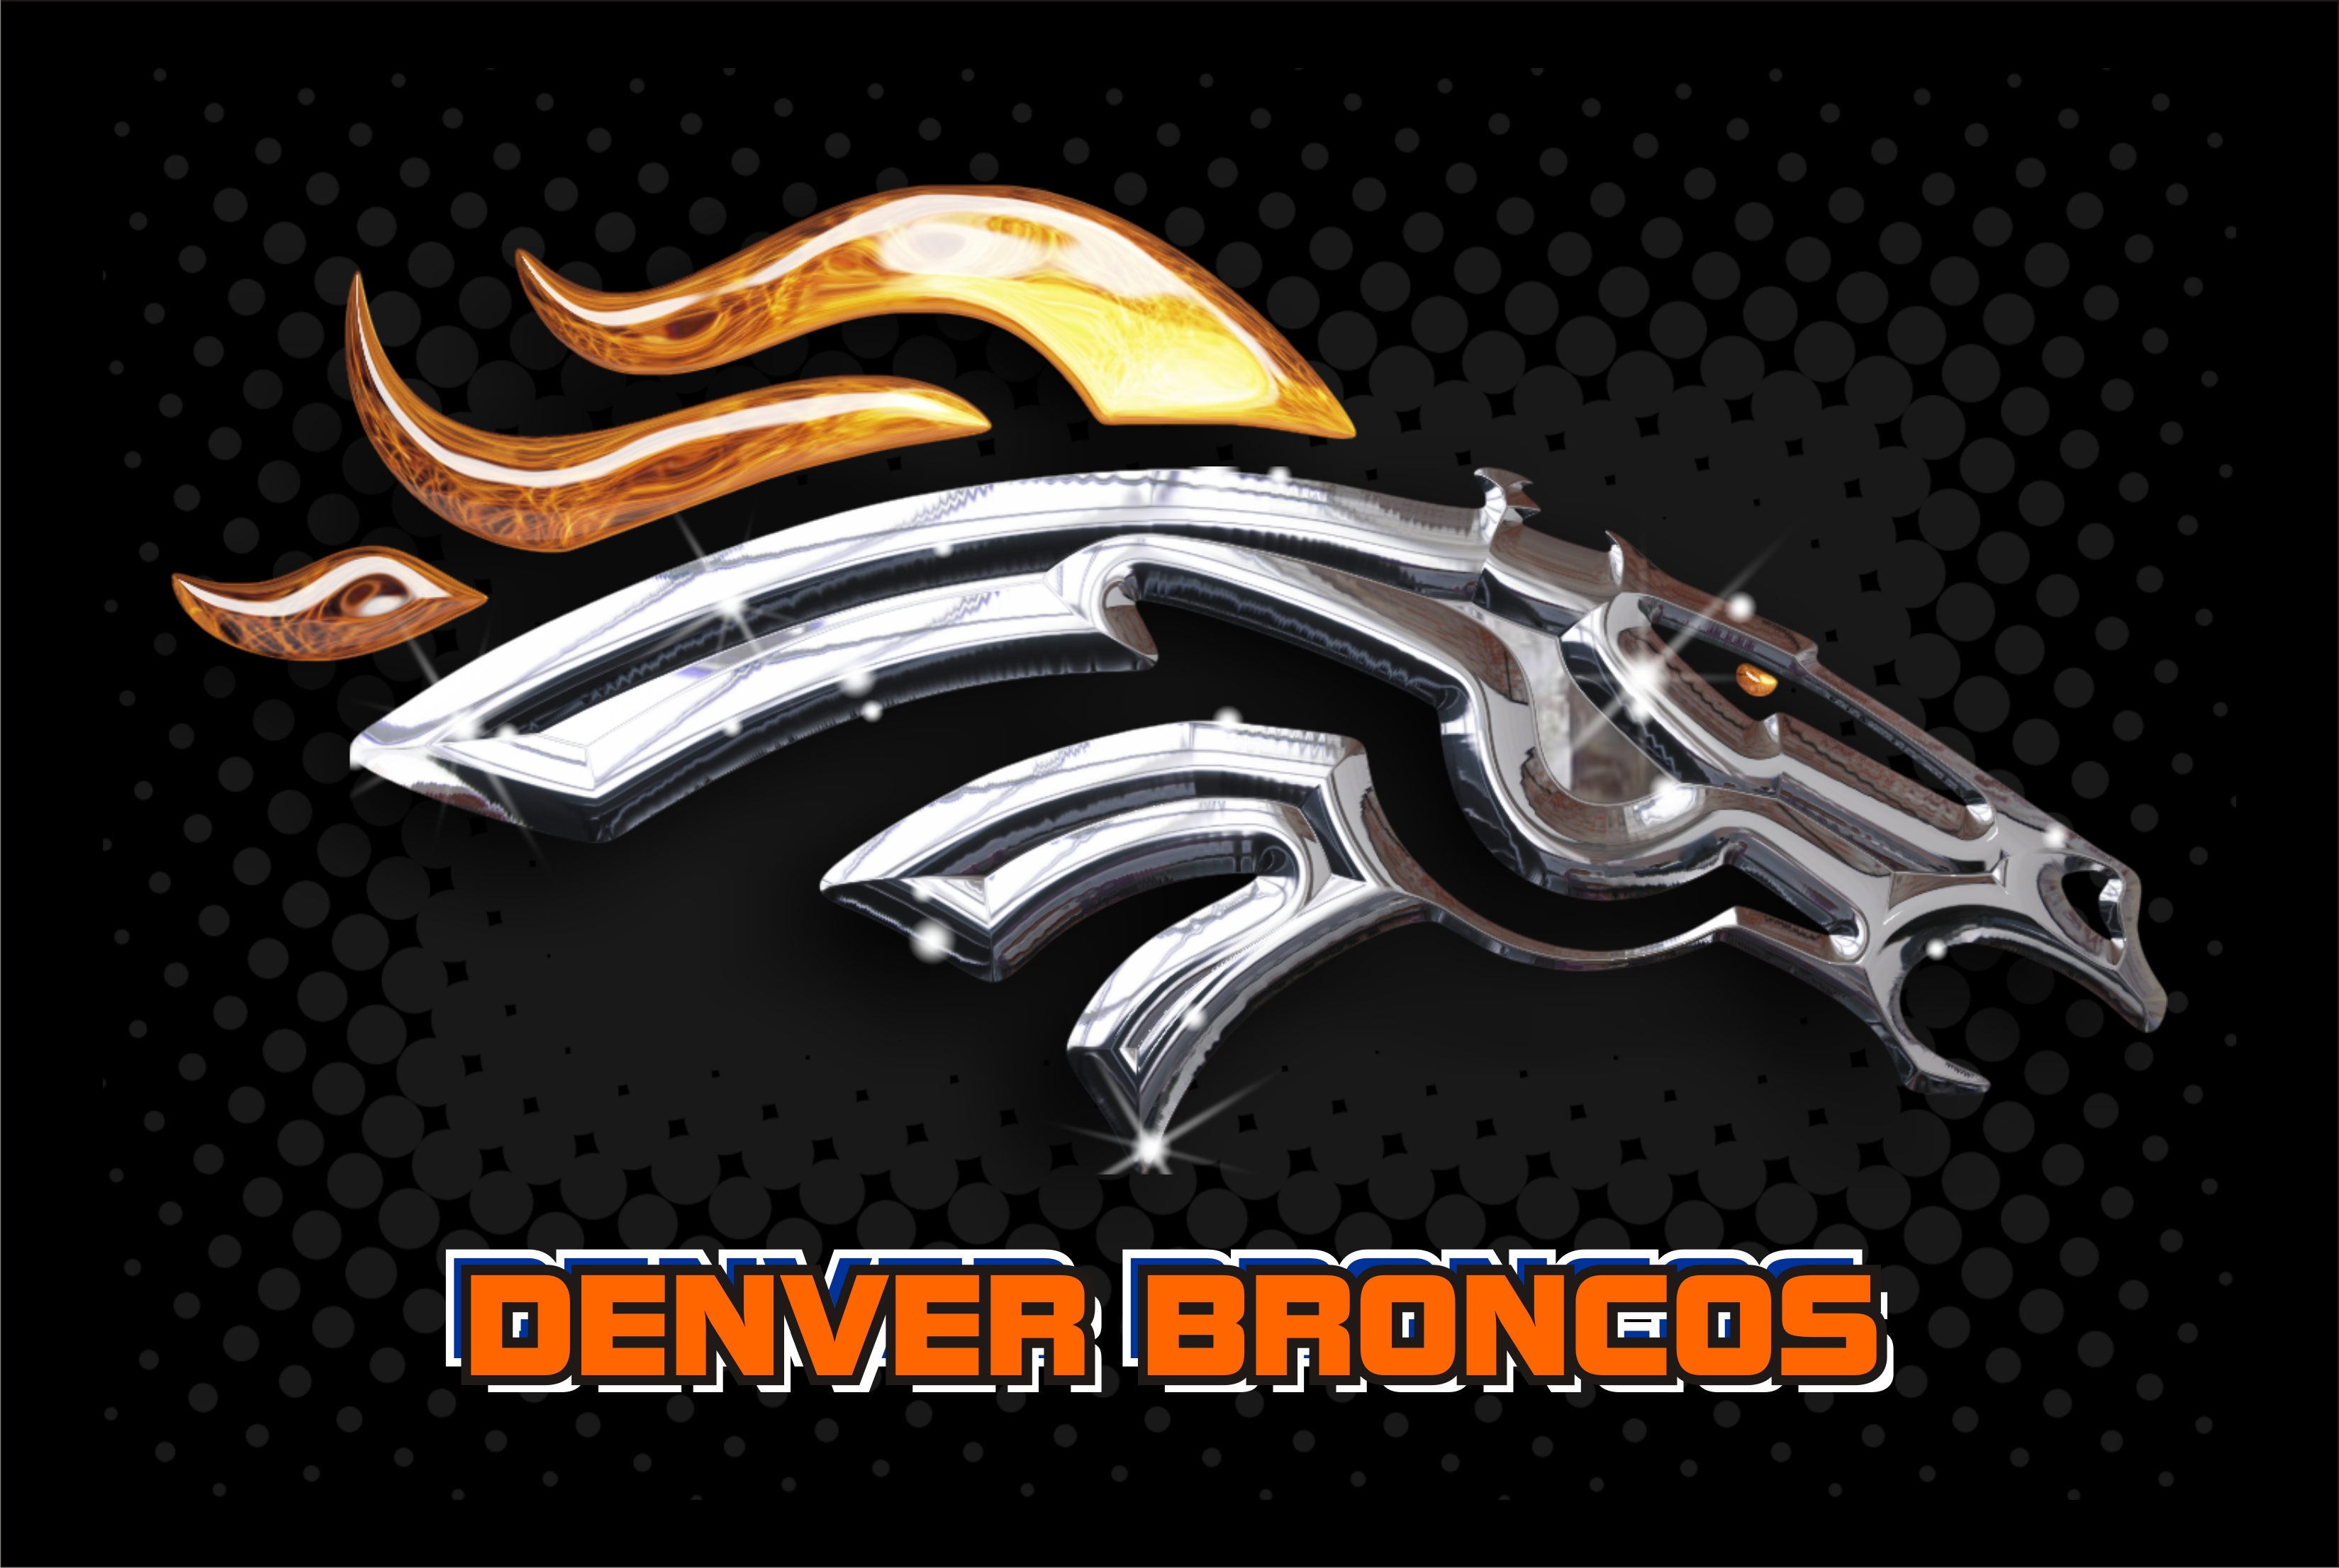 Denver Broncos Logo Wallpaper 2013 images 3299x2212